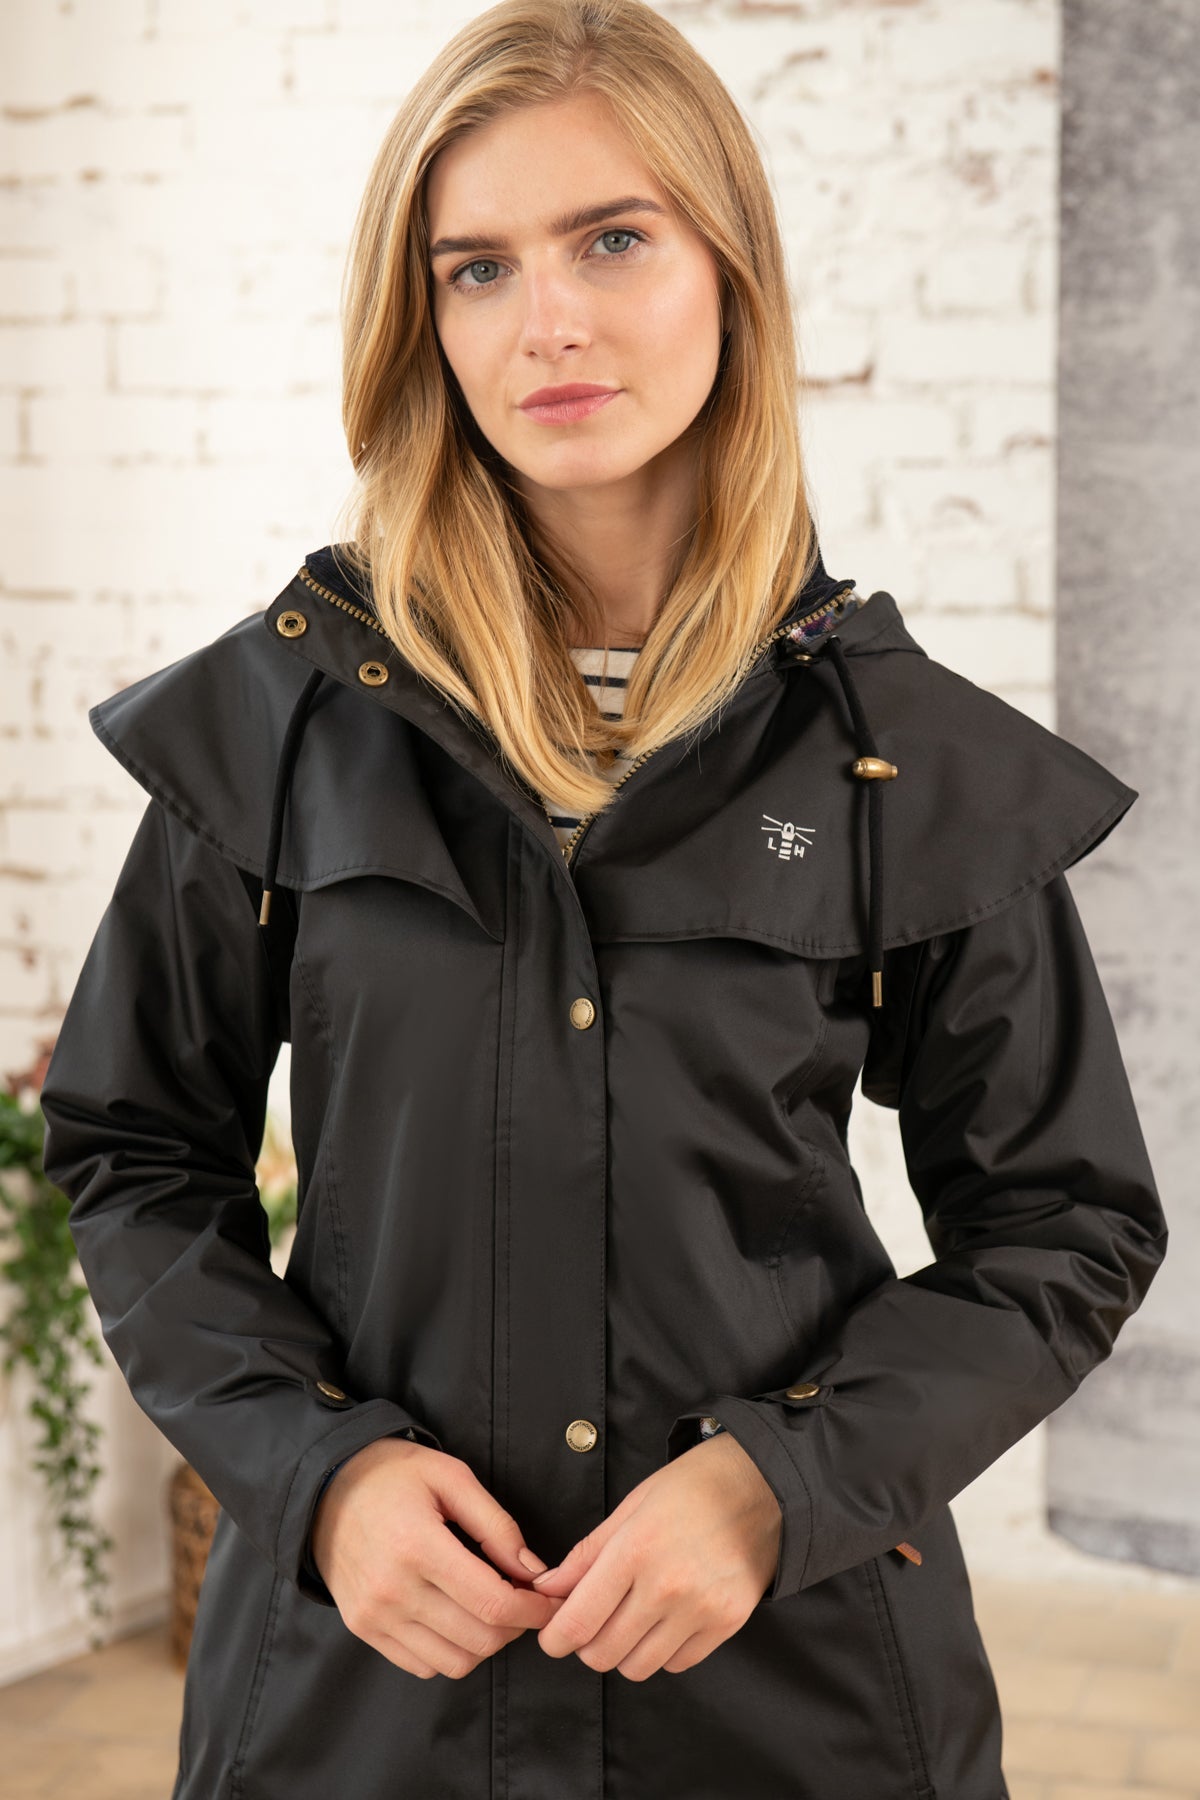 Outrider 3/4 Length Waterproof Raincoat - Black